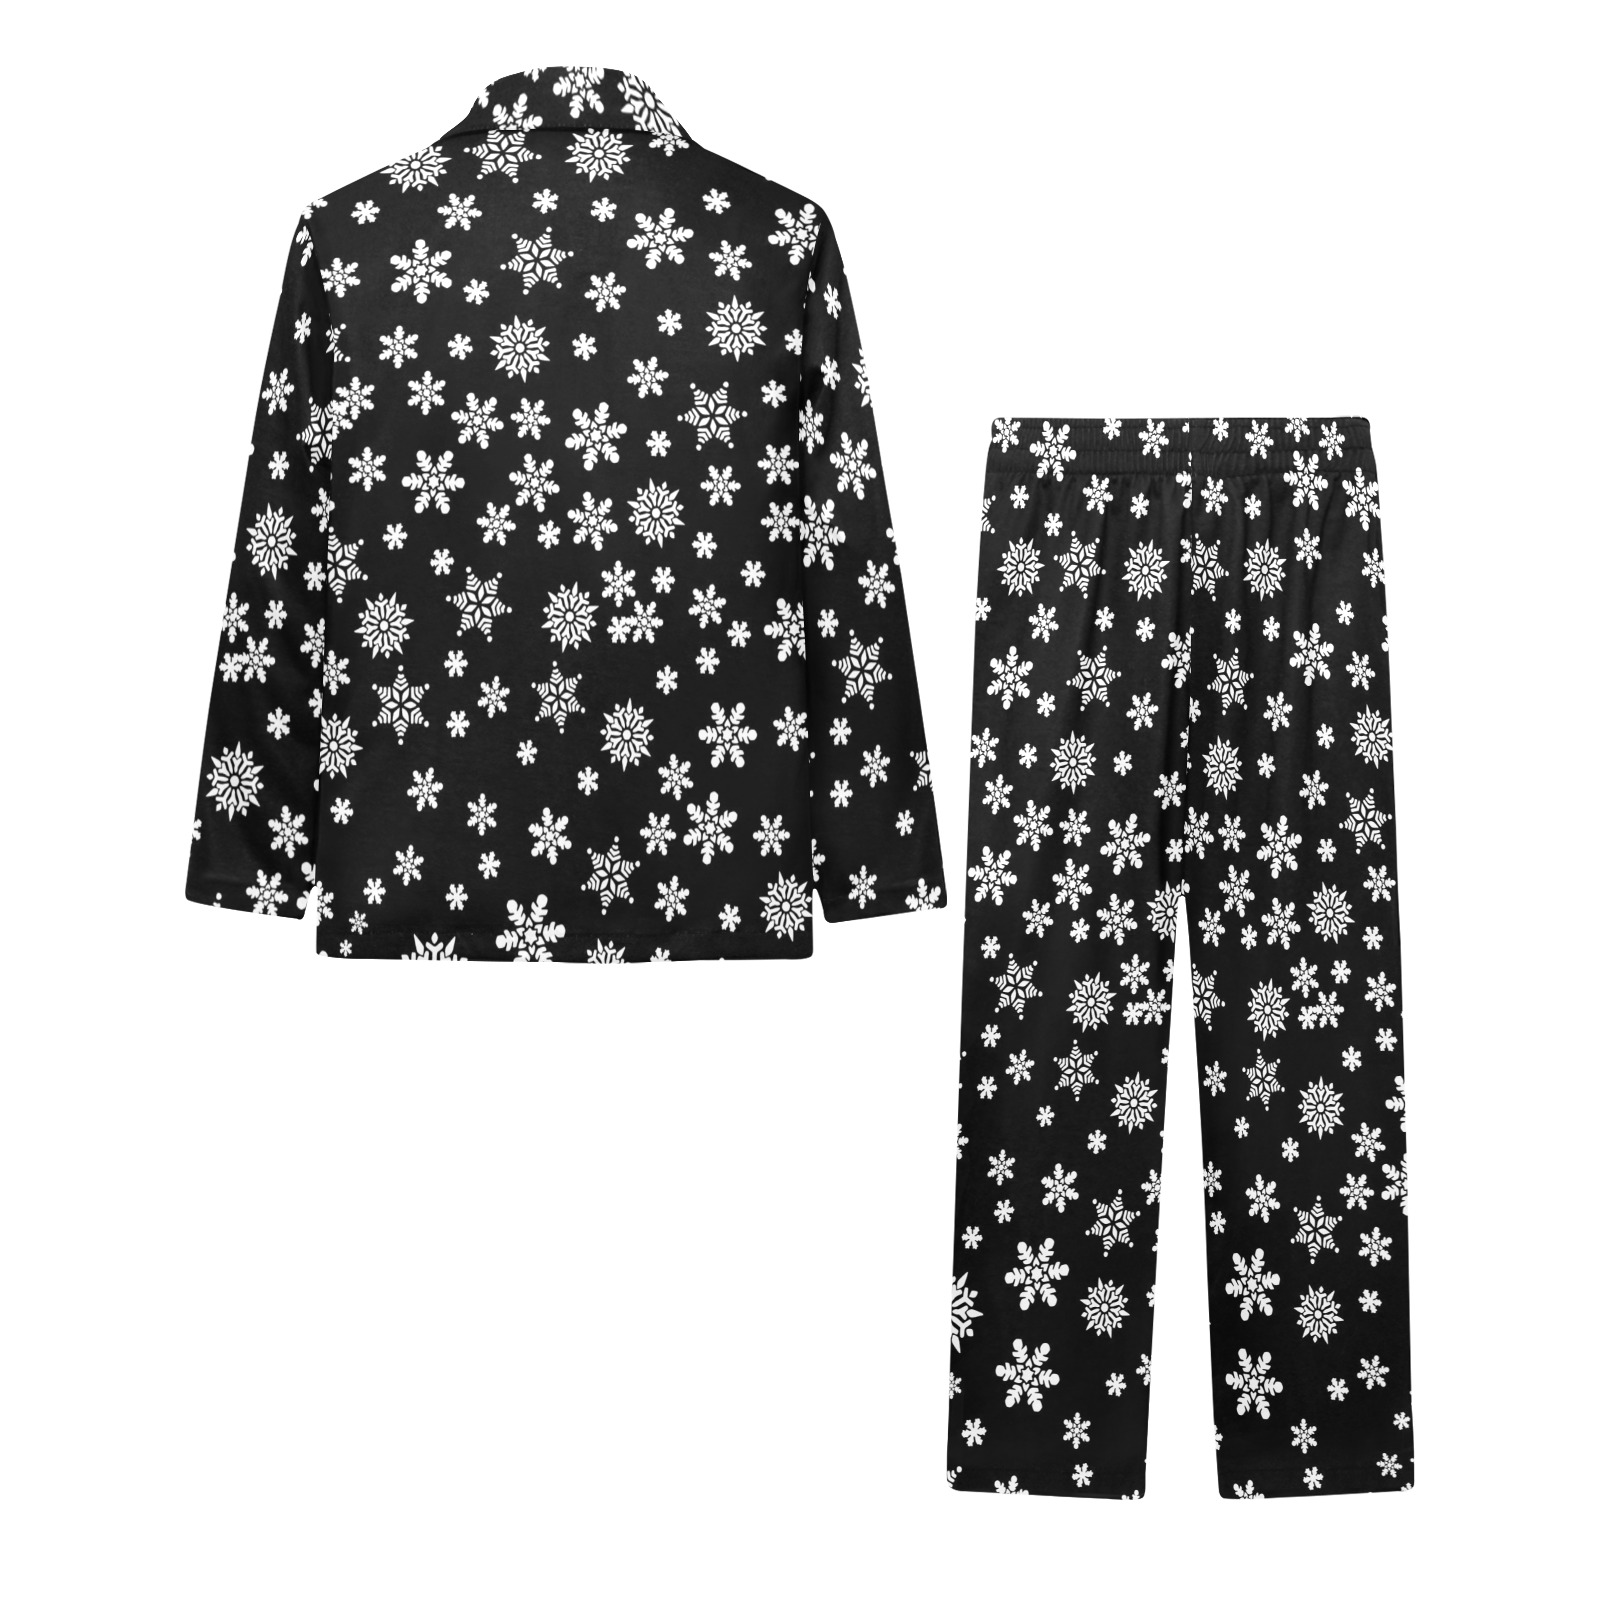 Christmas White Snowflakes on Black Little Boys' V-Neck Long Pajama Set (Sets 02)